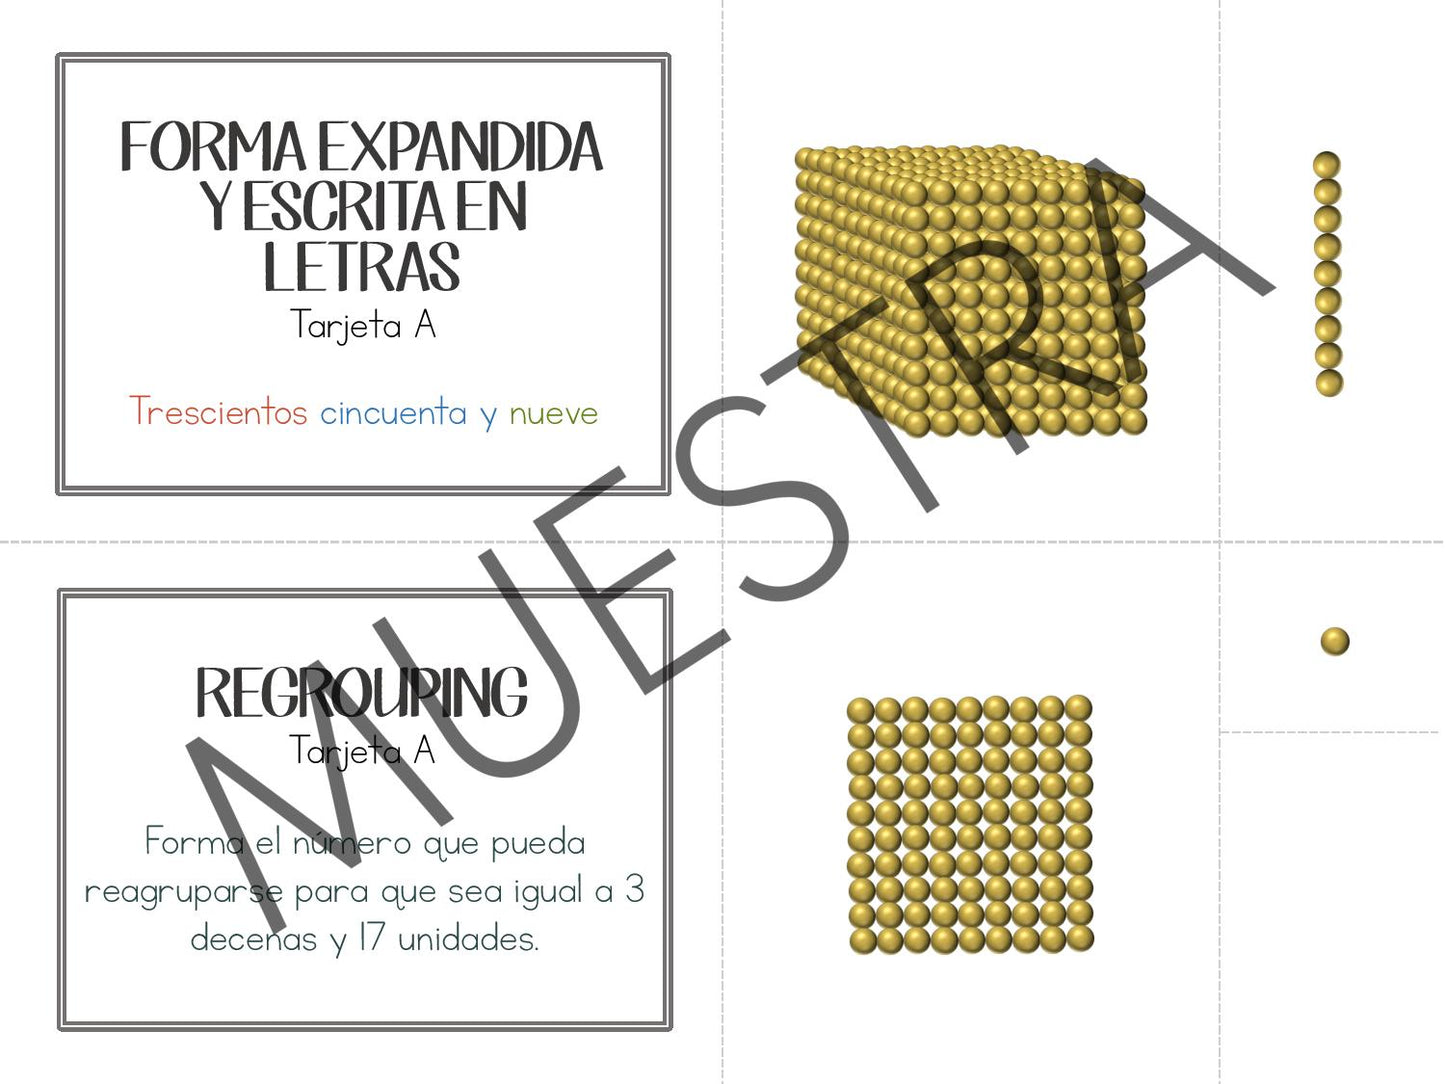 Español - Material para juego de sellos